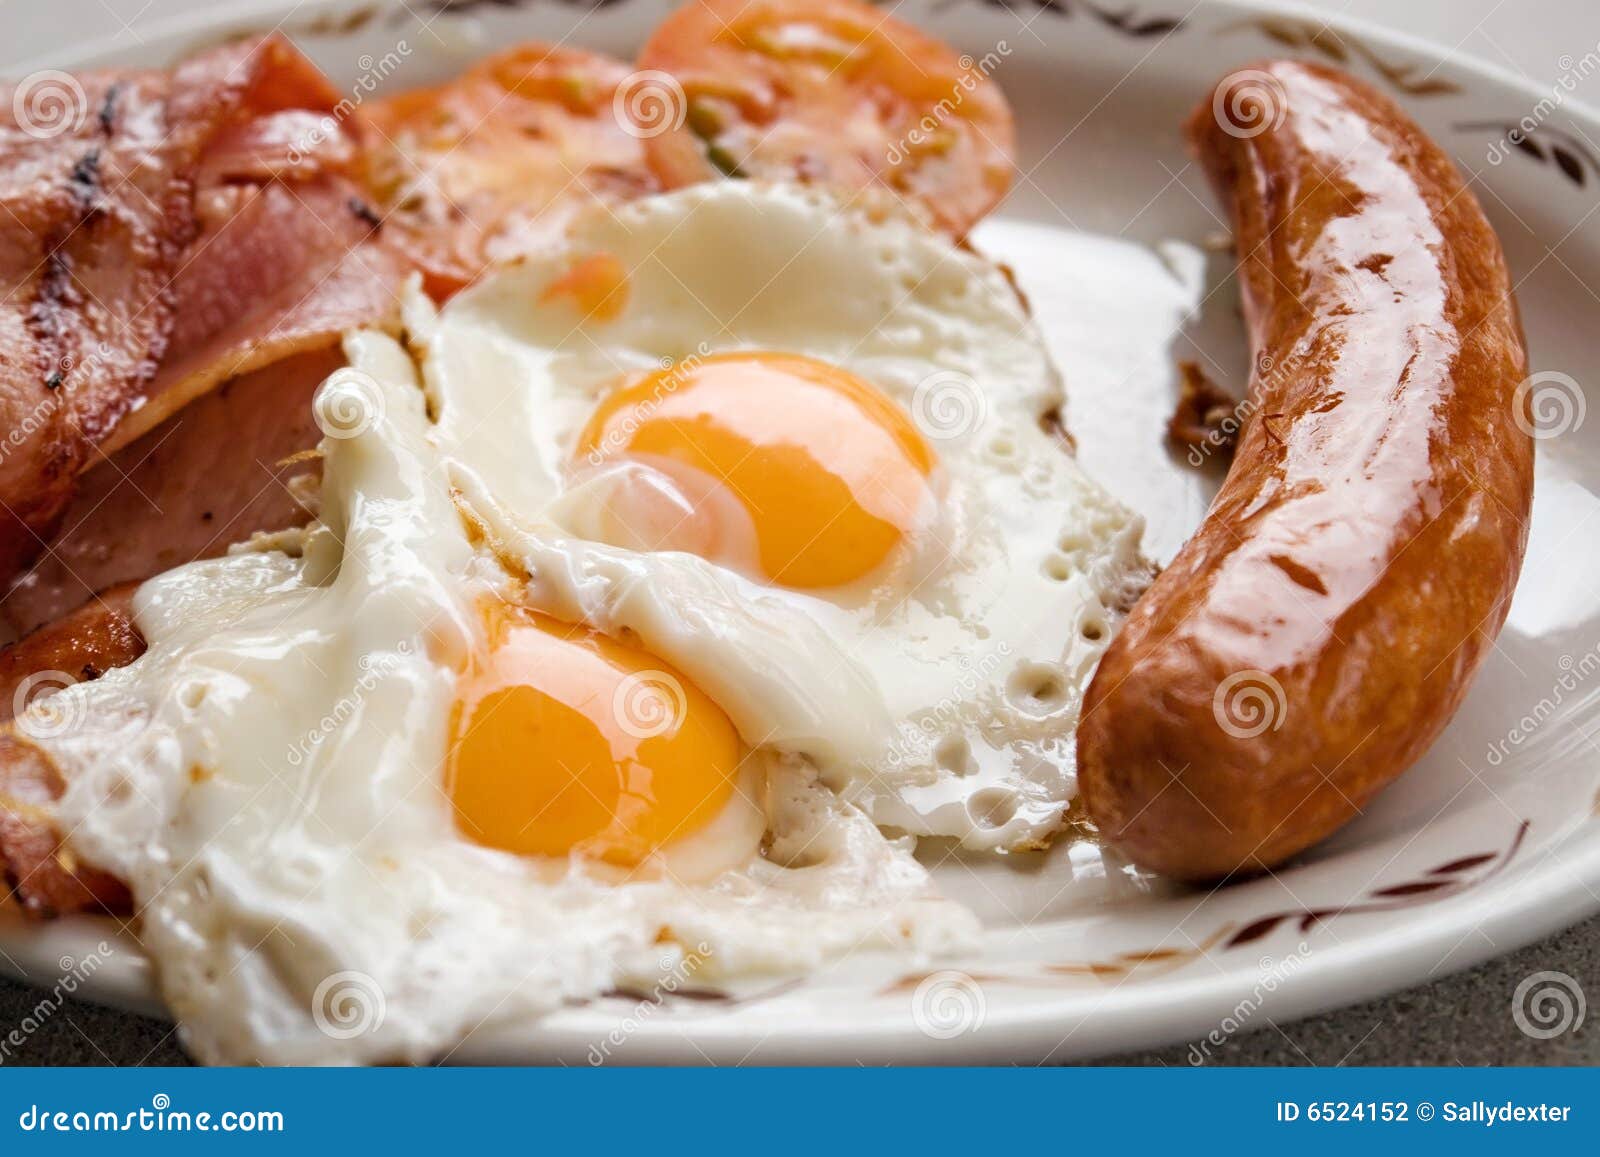 bacon-egg-sausage-breakfast-6524152.jpg